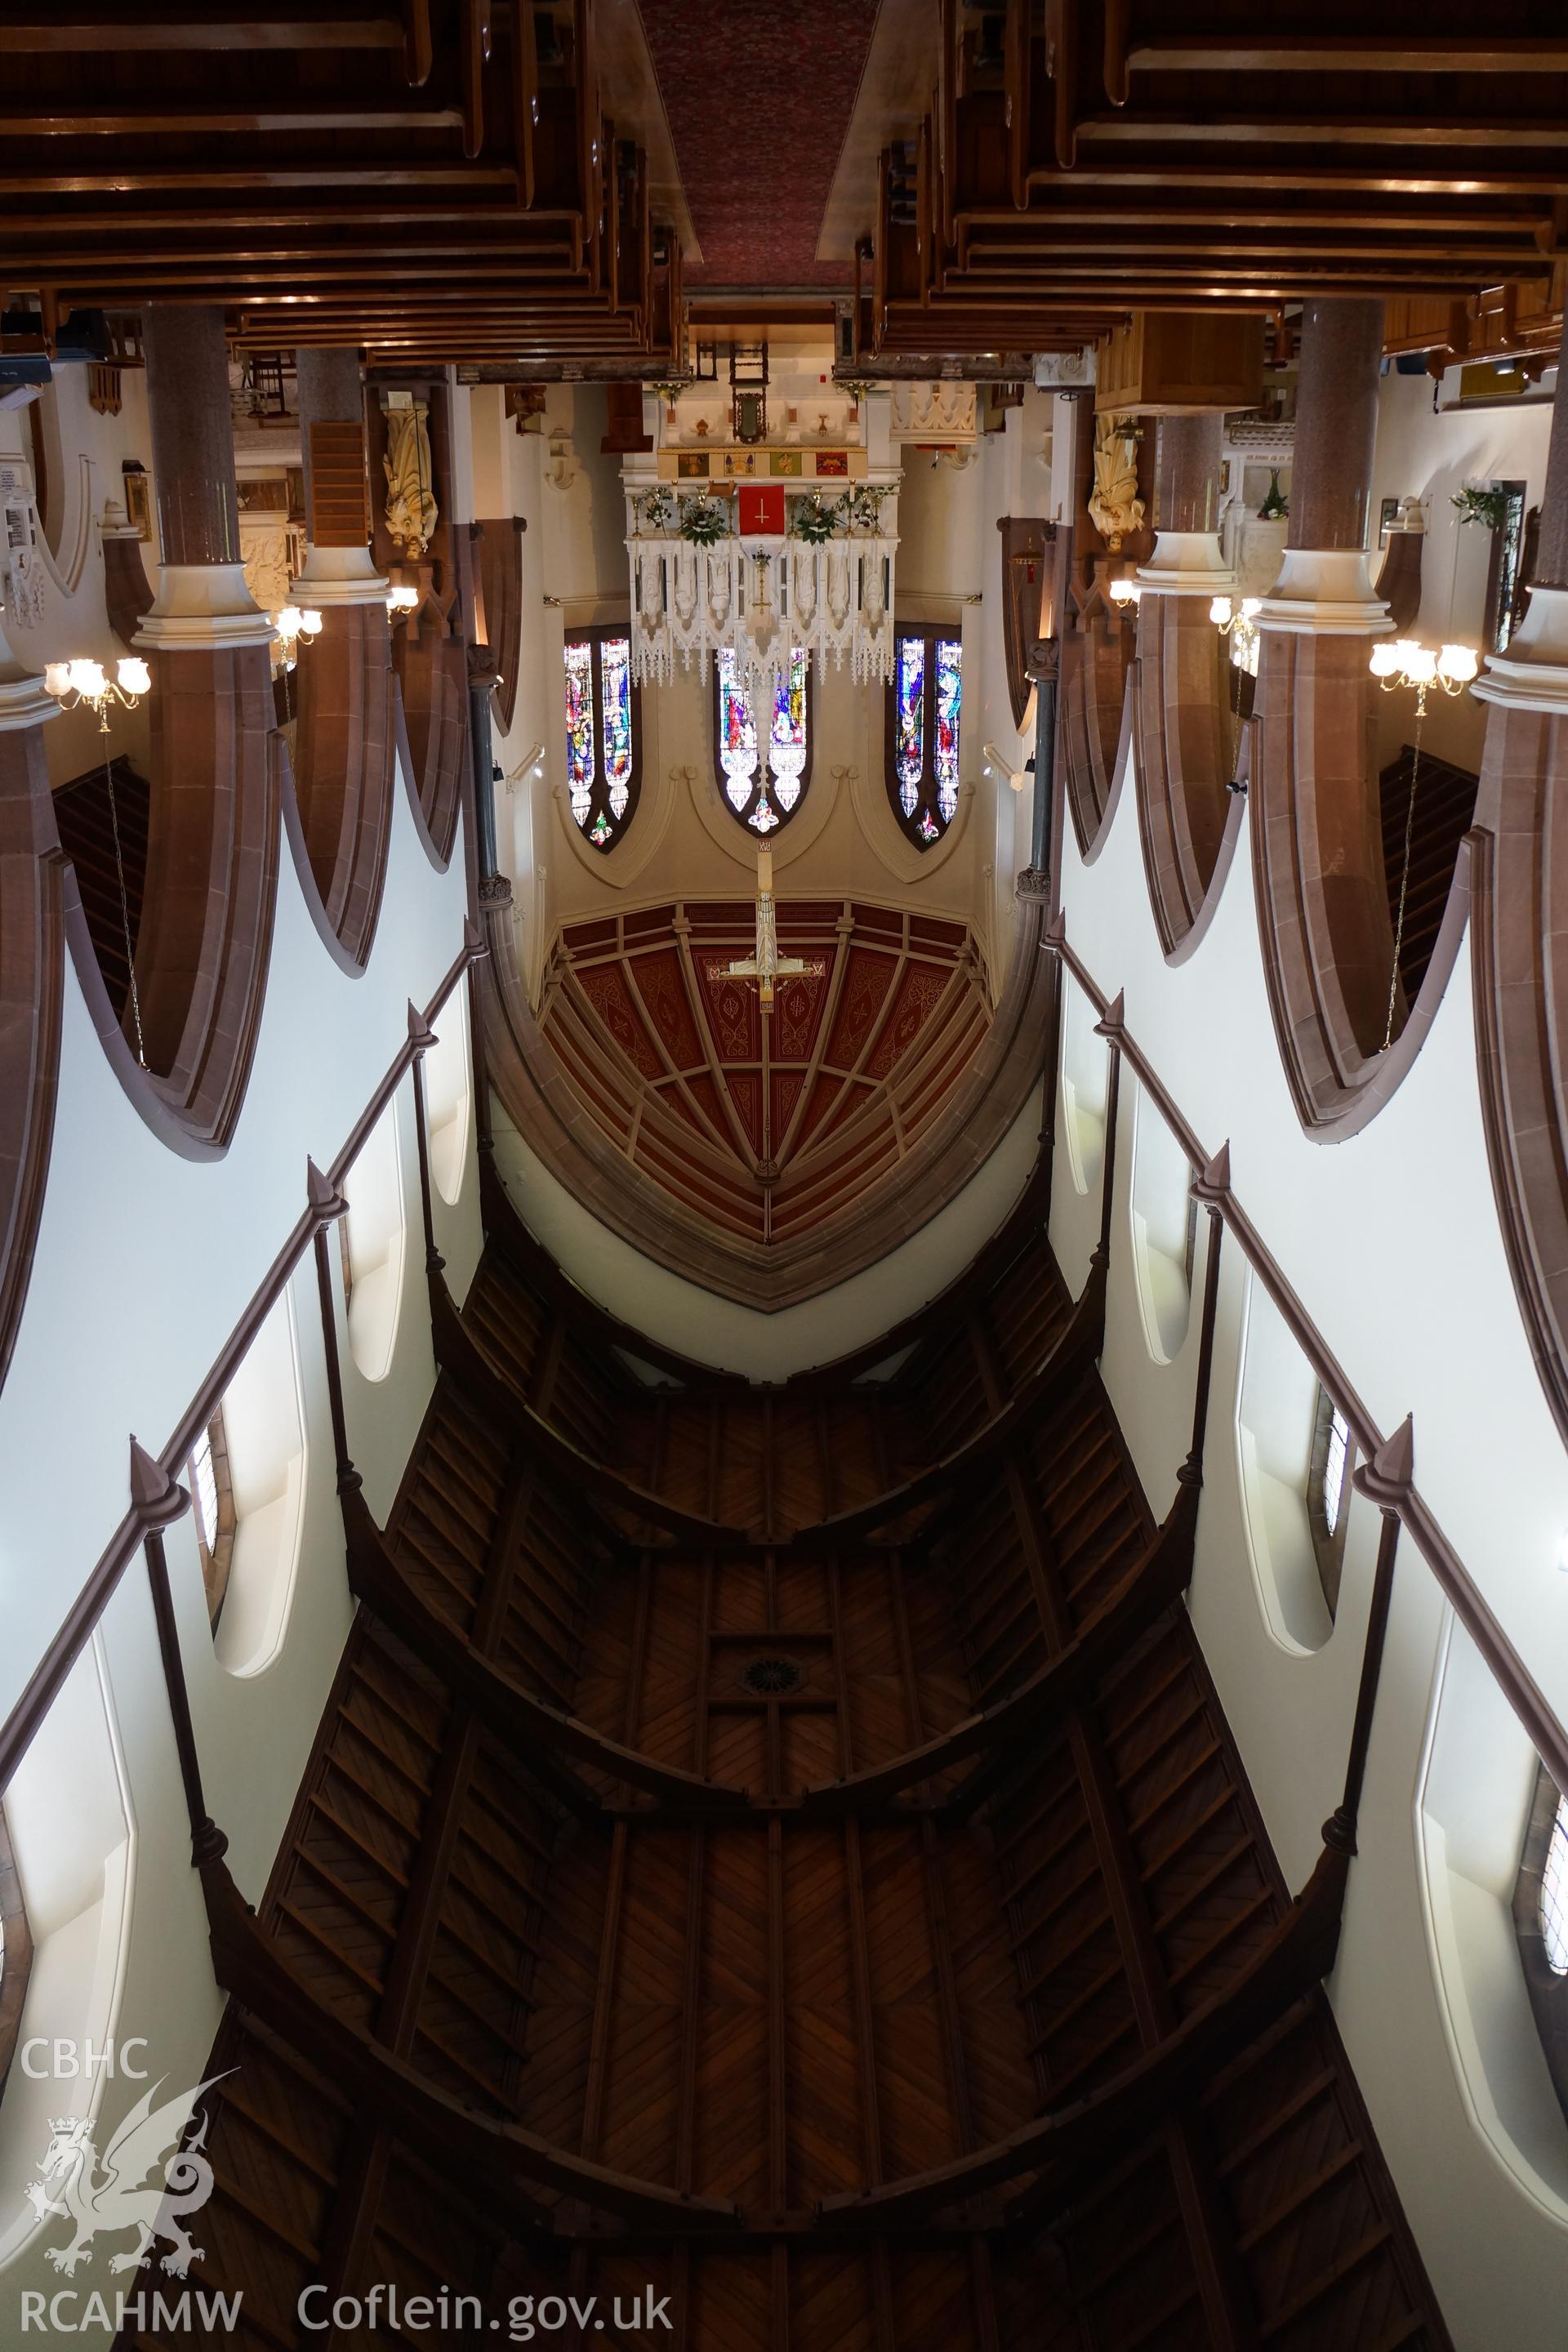 Digital colour photograph showing interior of St Joseph's Catholic church, Colwyn Bay.